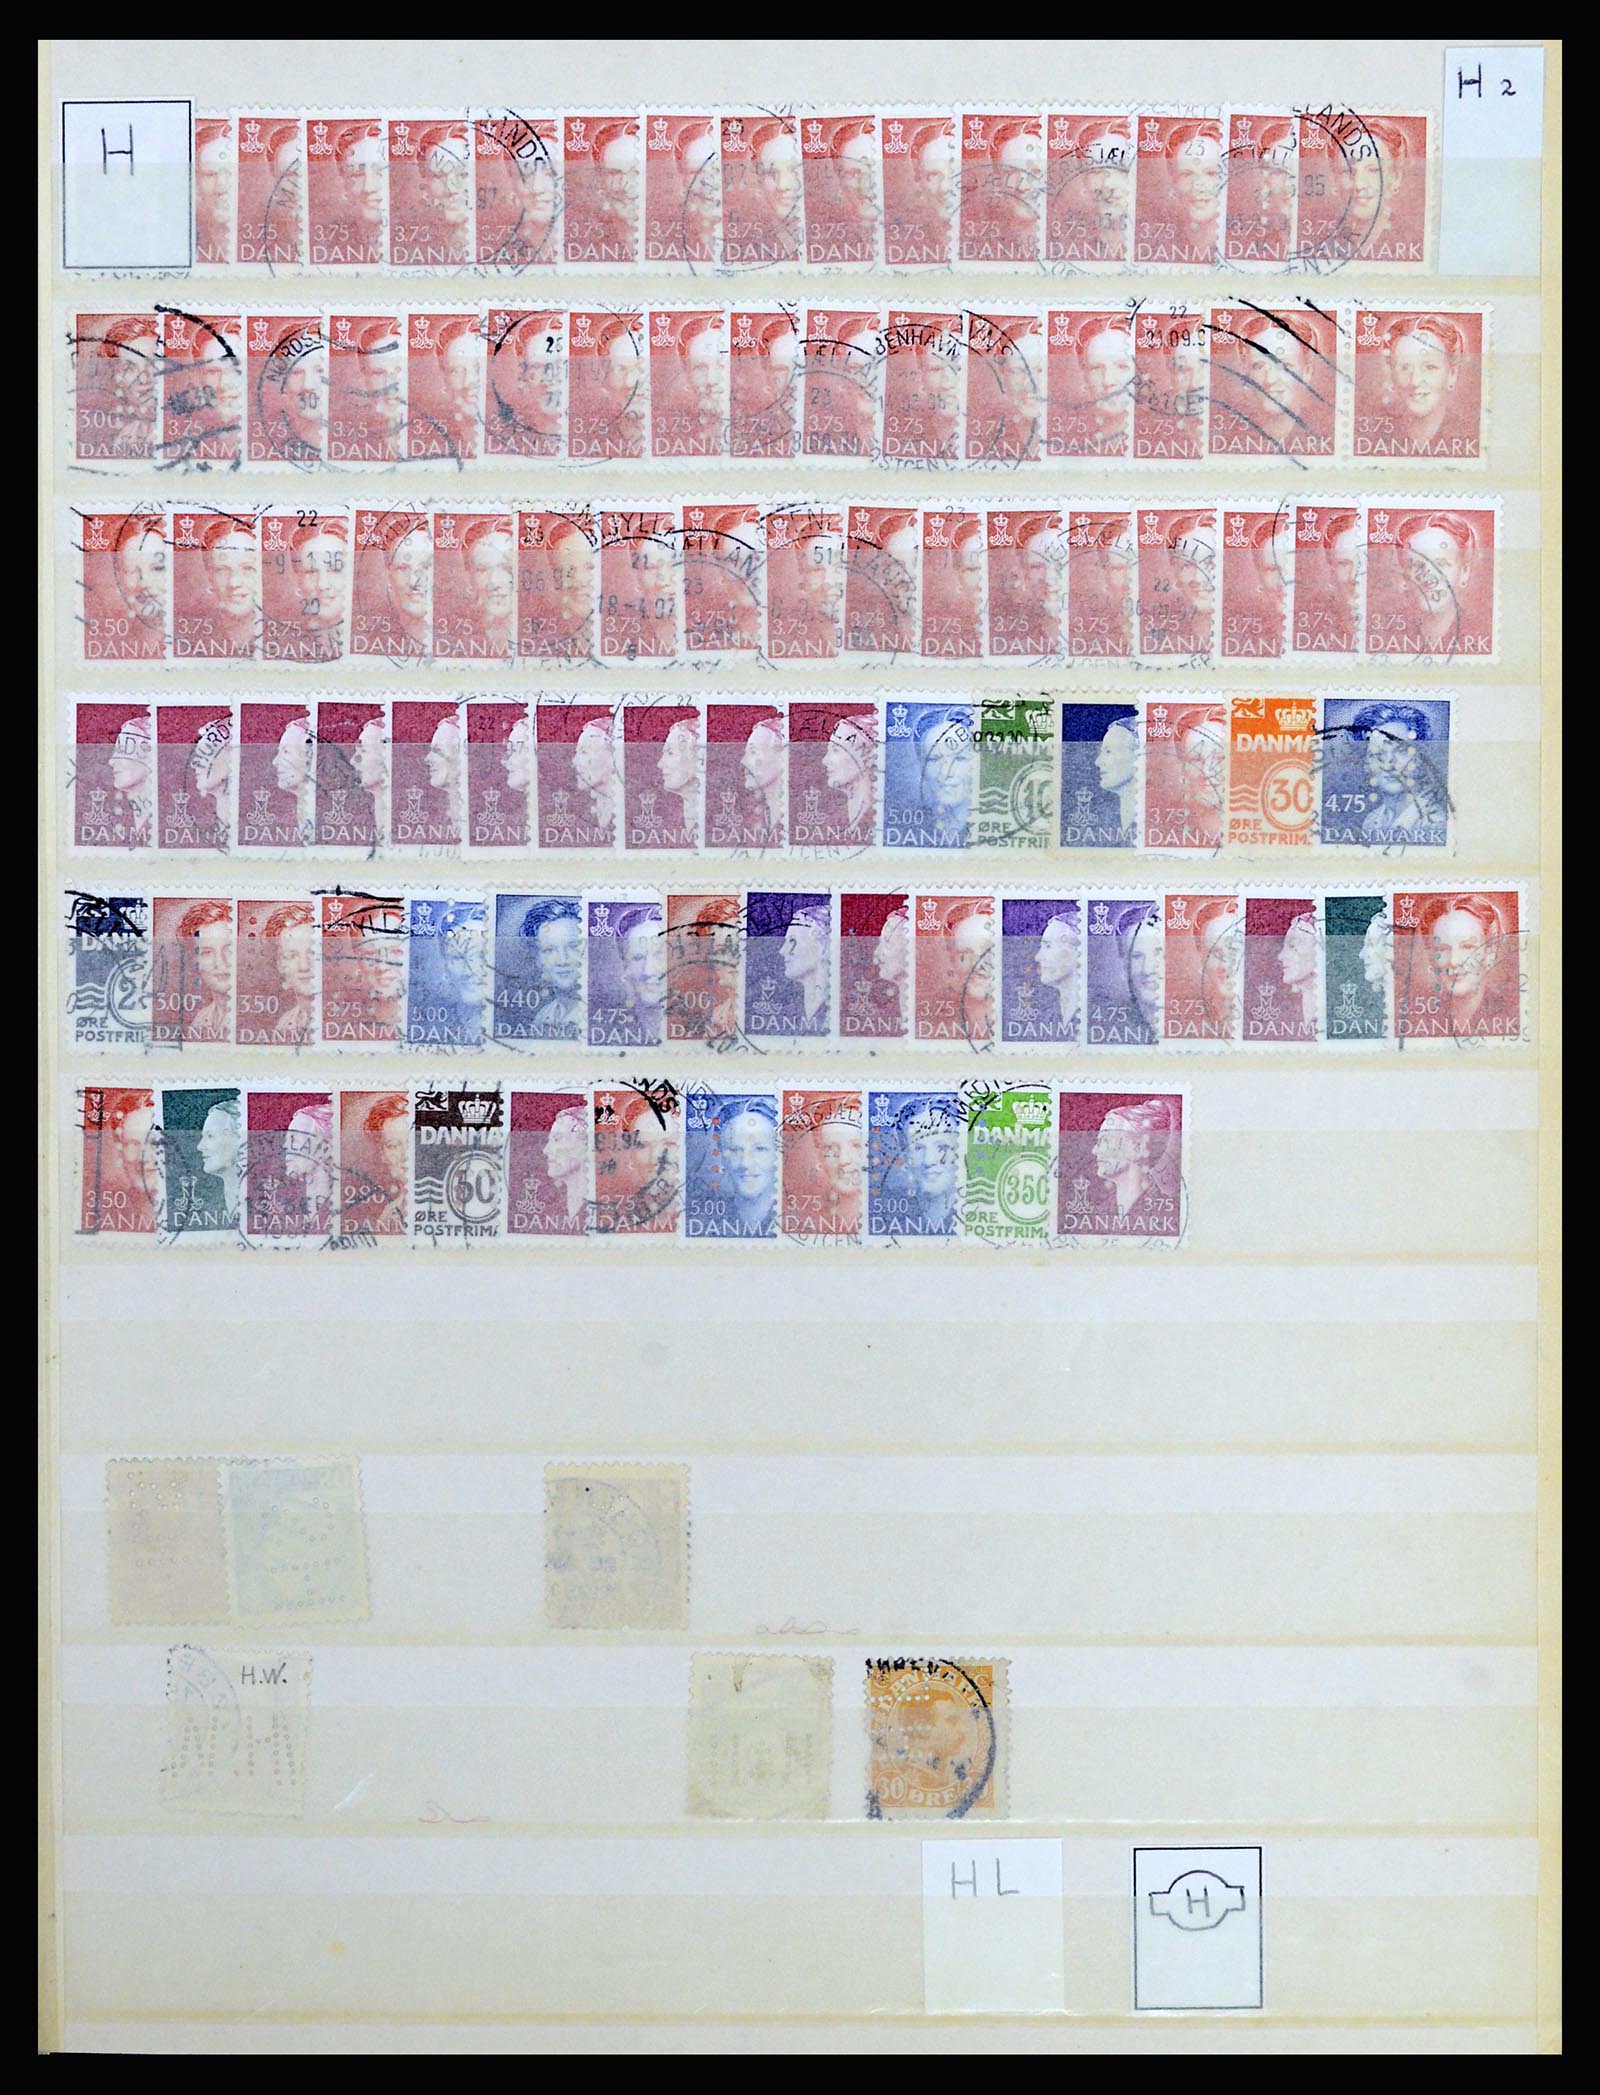 37056 050 - Stamp collection 37056 Denmark perfins.